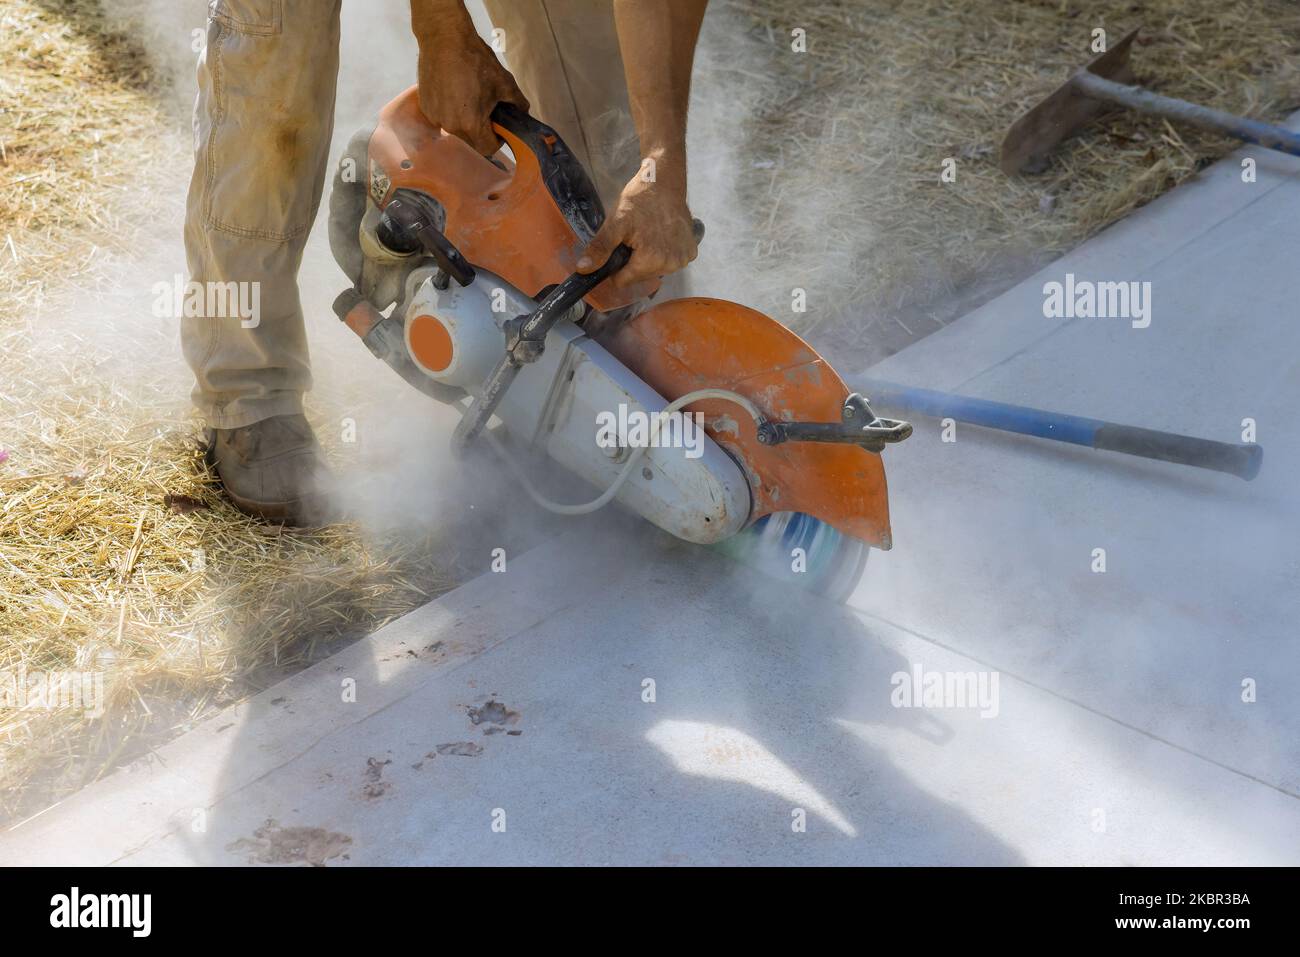 Construction worker uses diamond blade saw to cut concrete sidewalk Stock Photo